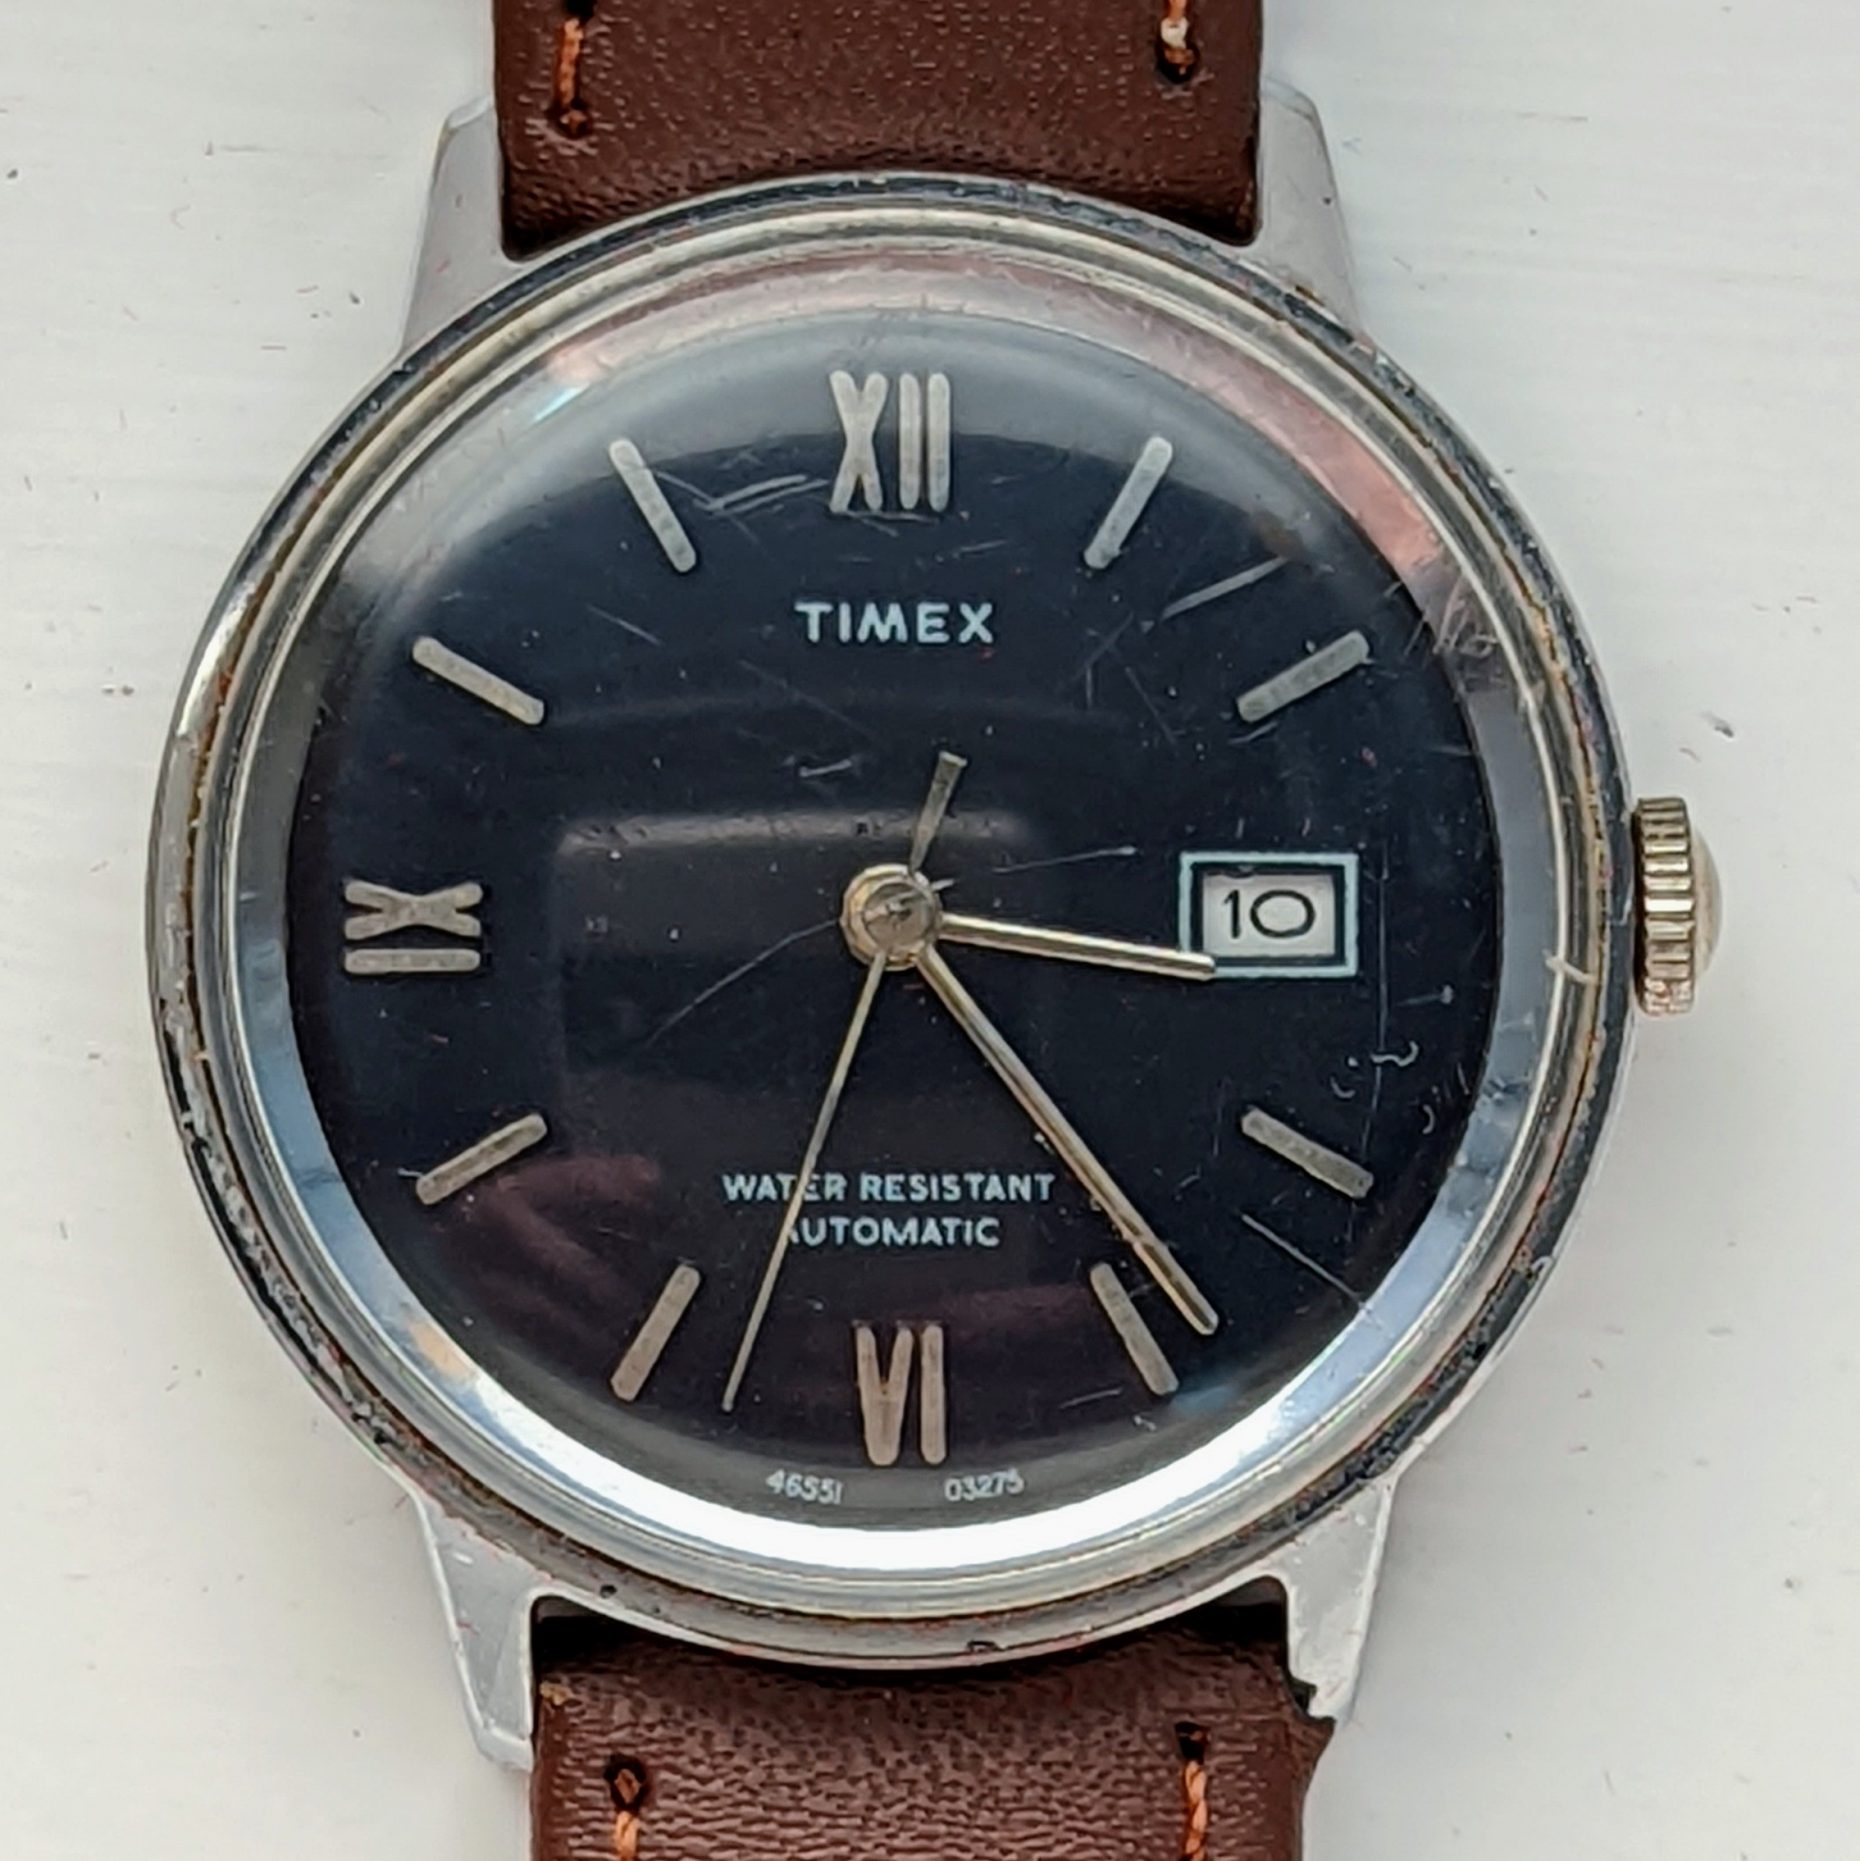 Timex Viscount 46551 03275 [1975]